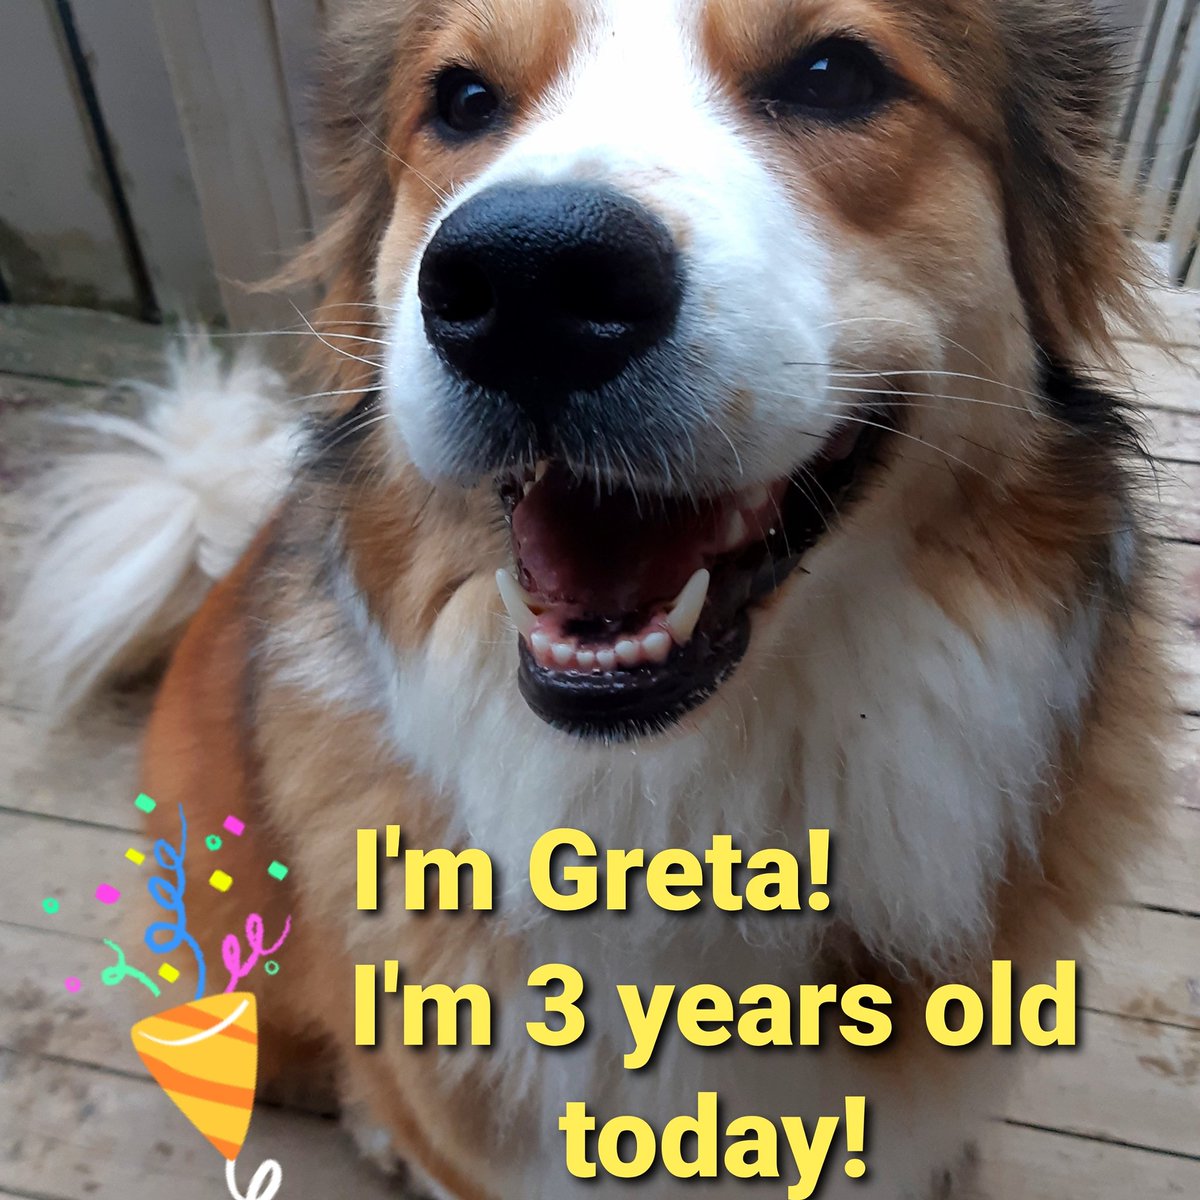 Three years of hard-smilin'!

#greatbernese #greatpyrenees #bernesemountaindog